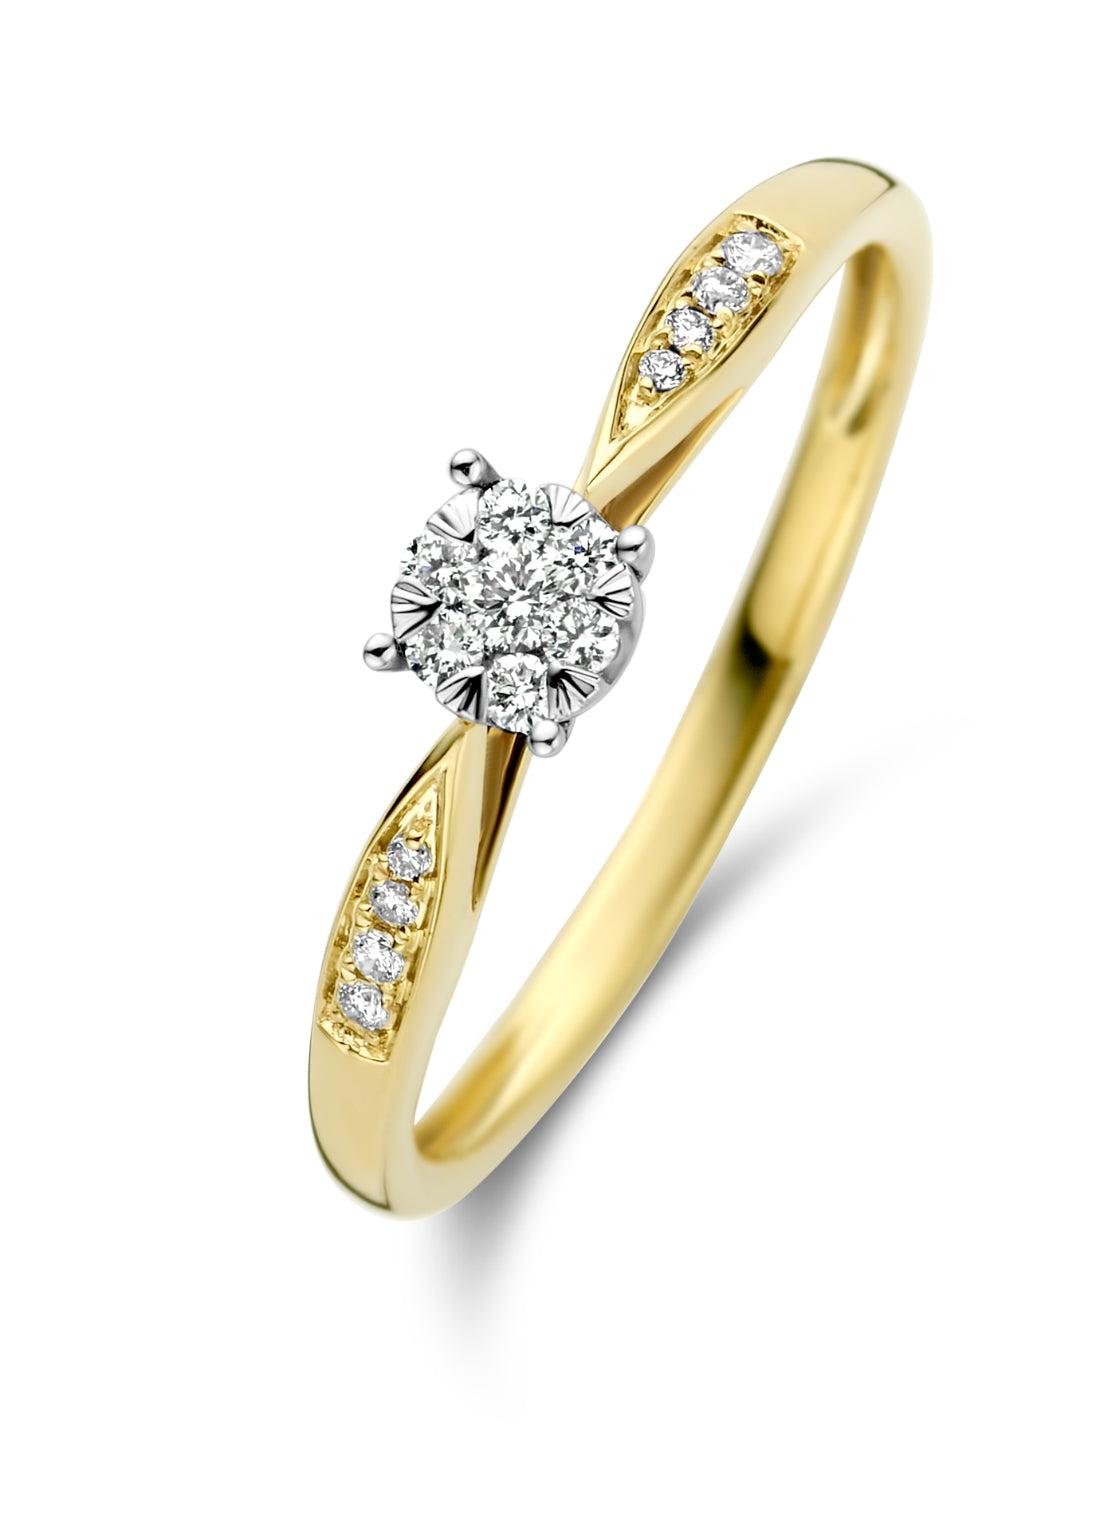 Golden Ring, 0.15 CT Diamond, Enchanted